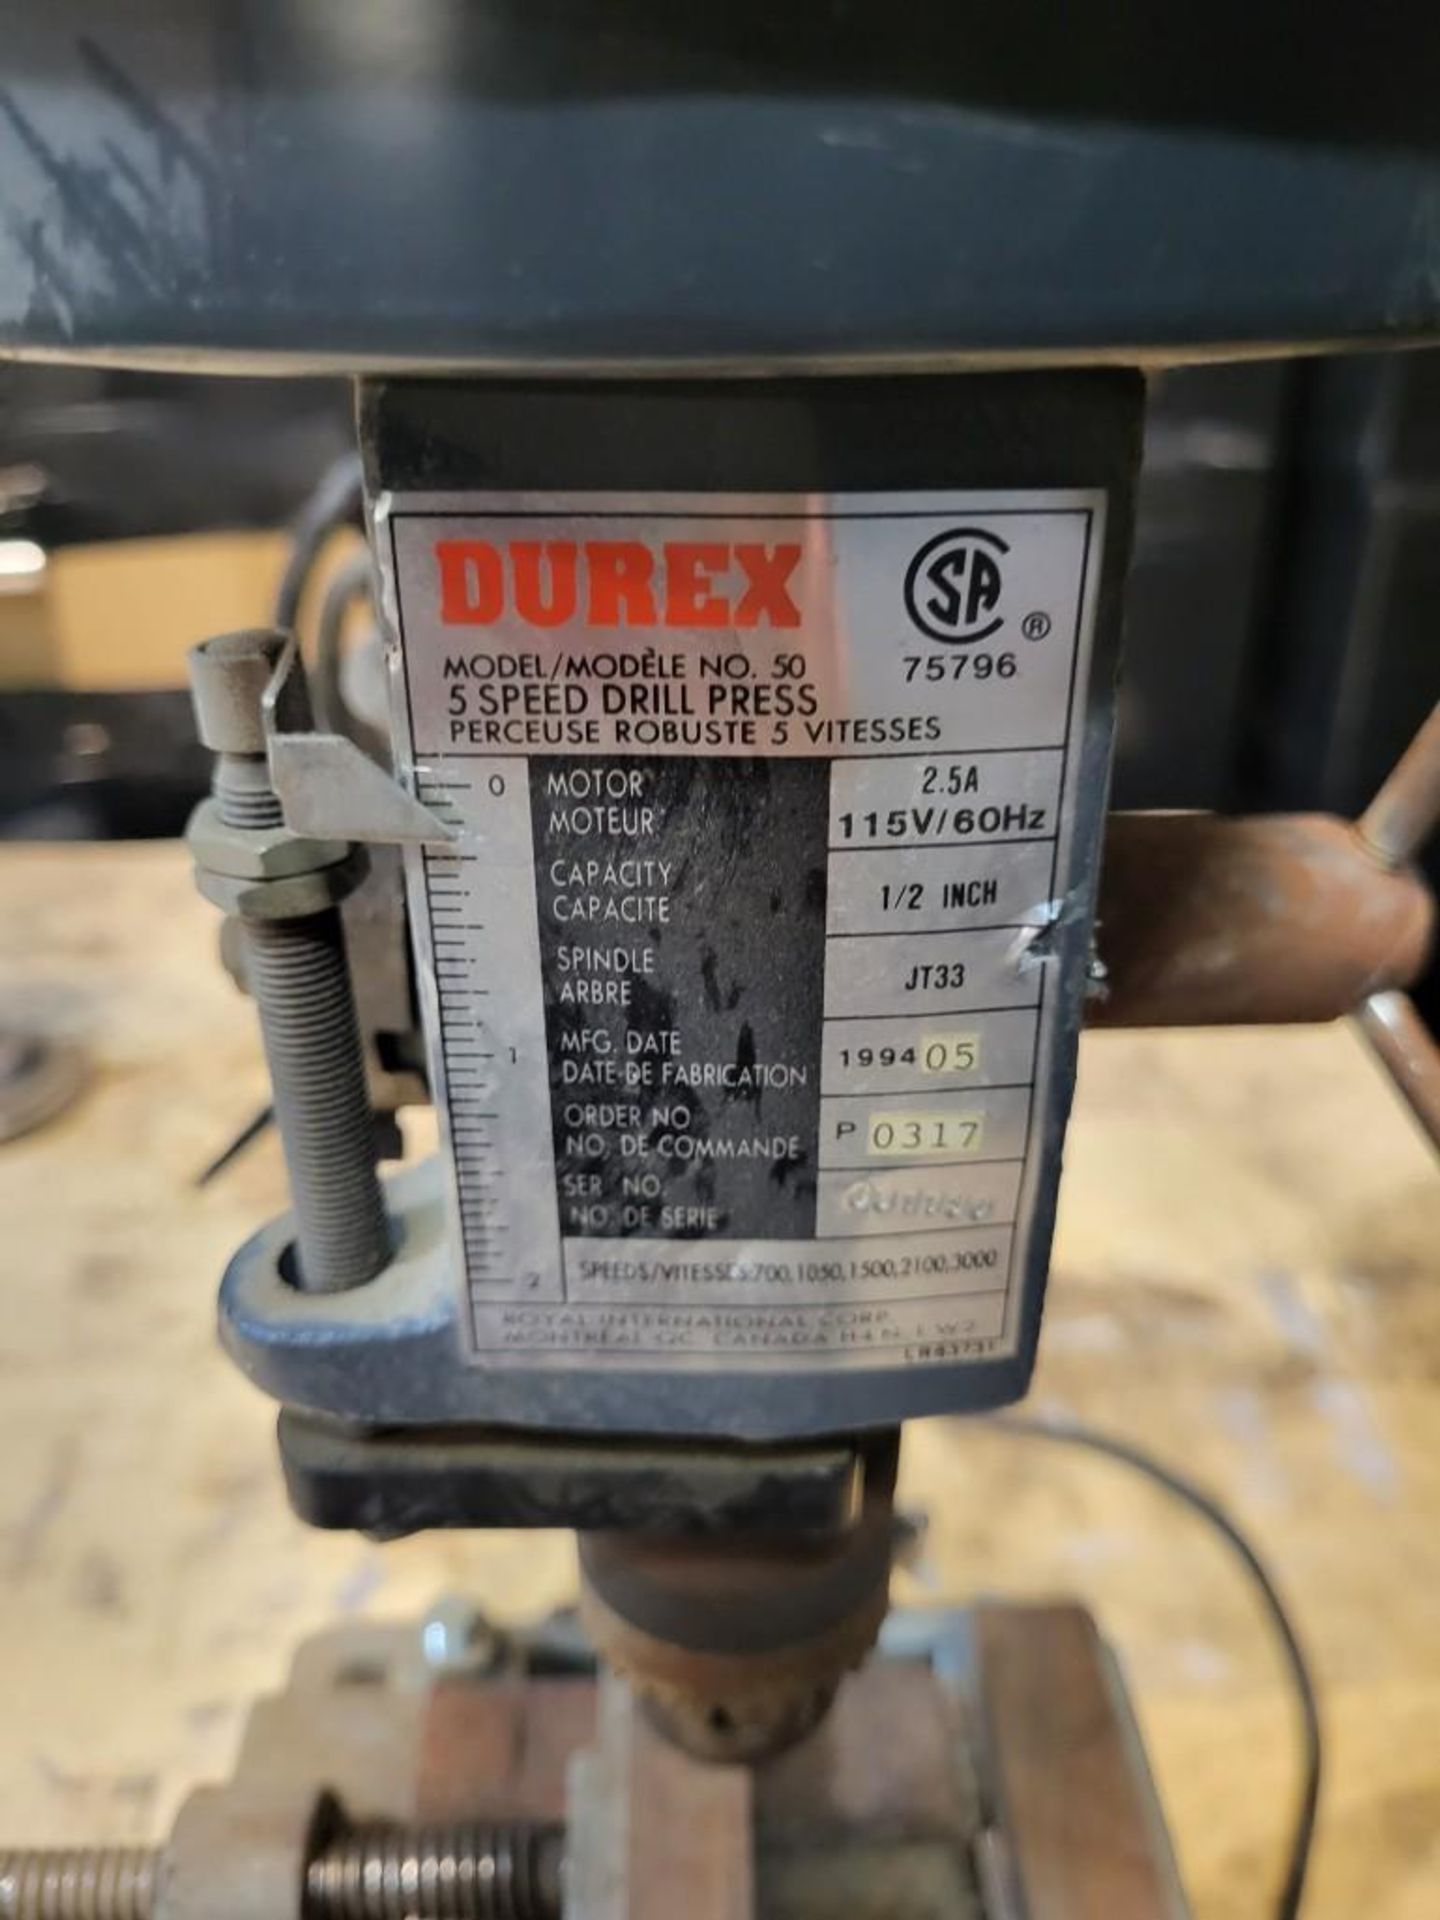 Durex Model 5 Speed 50 Drill Press - Image 2 of 5